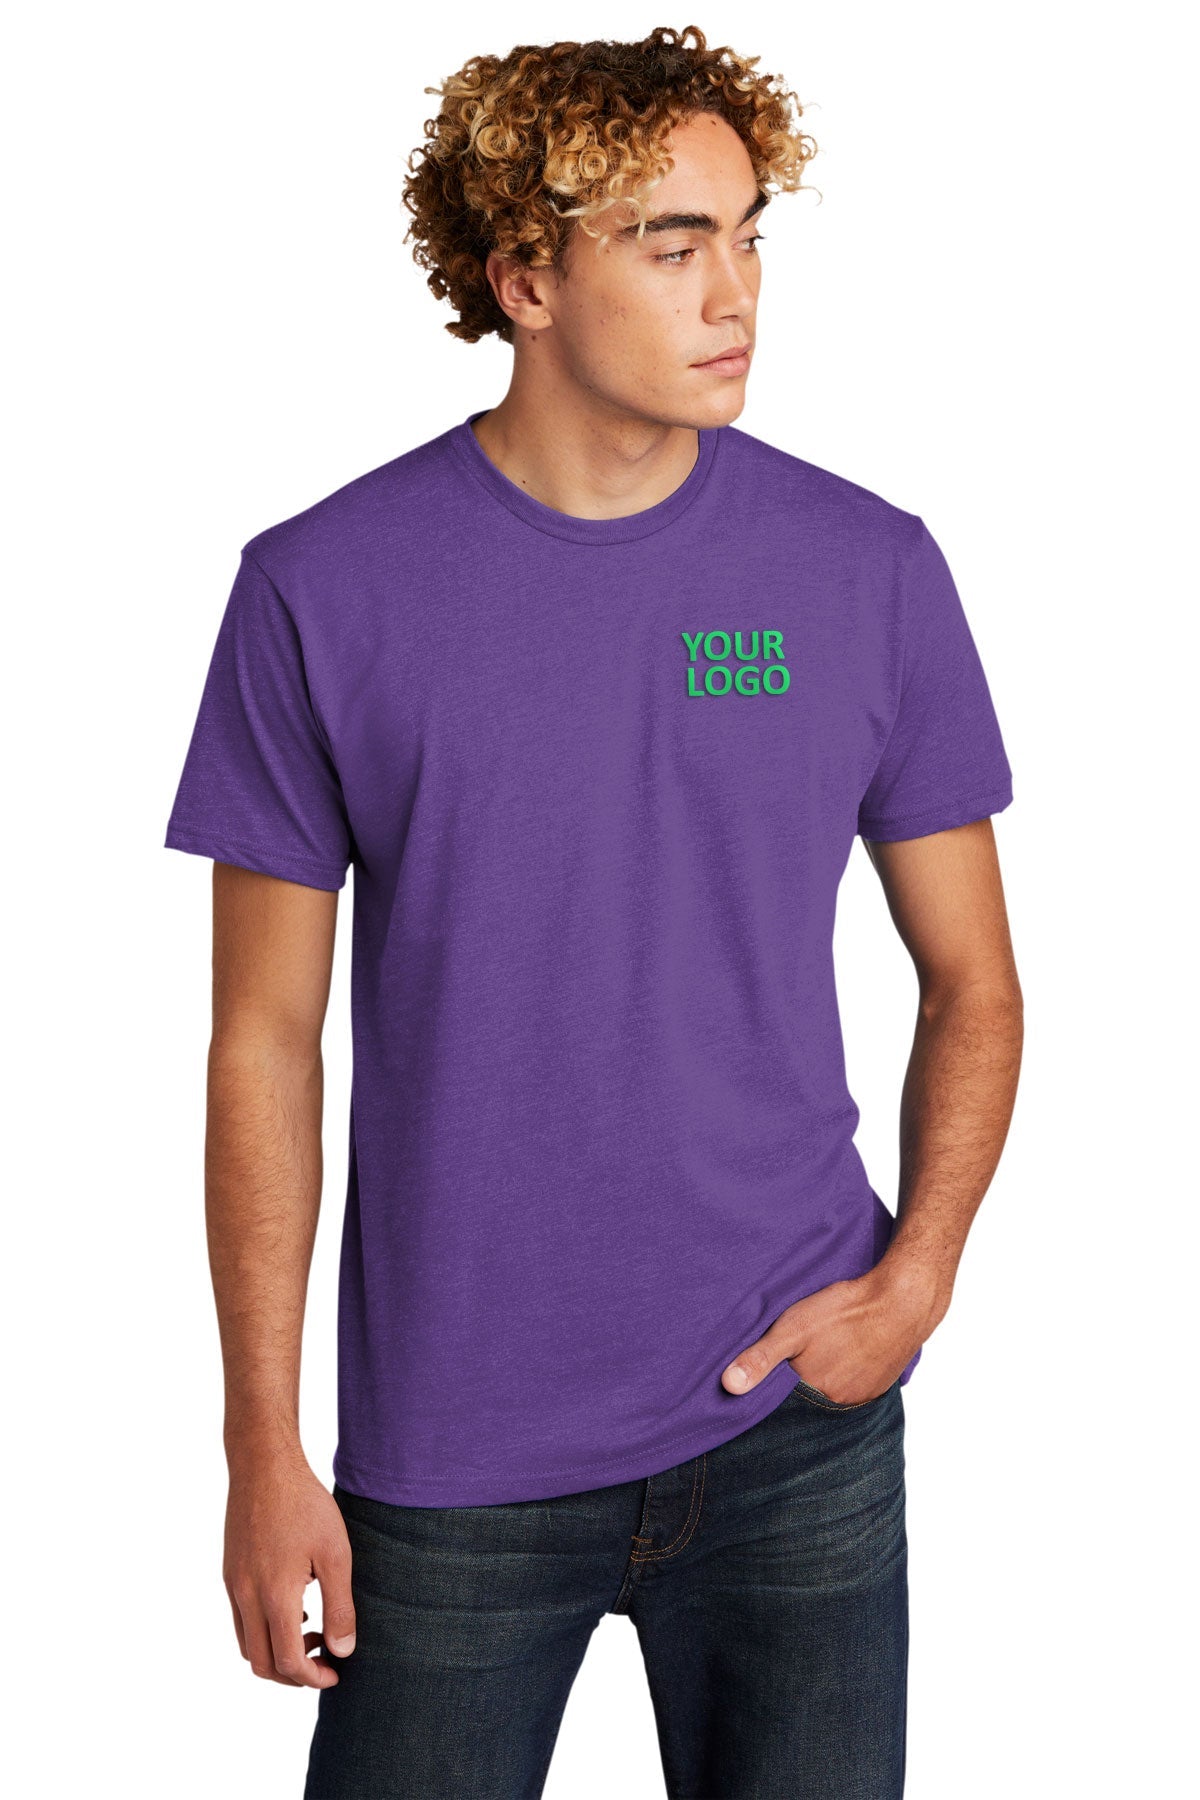 Next Level Unisex CVC Customized T-Shirts, Purple Rush